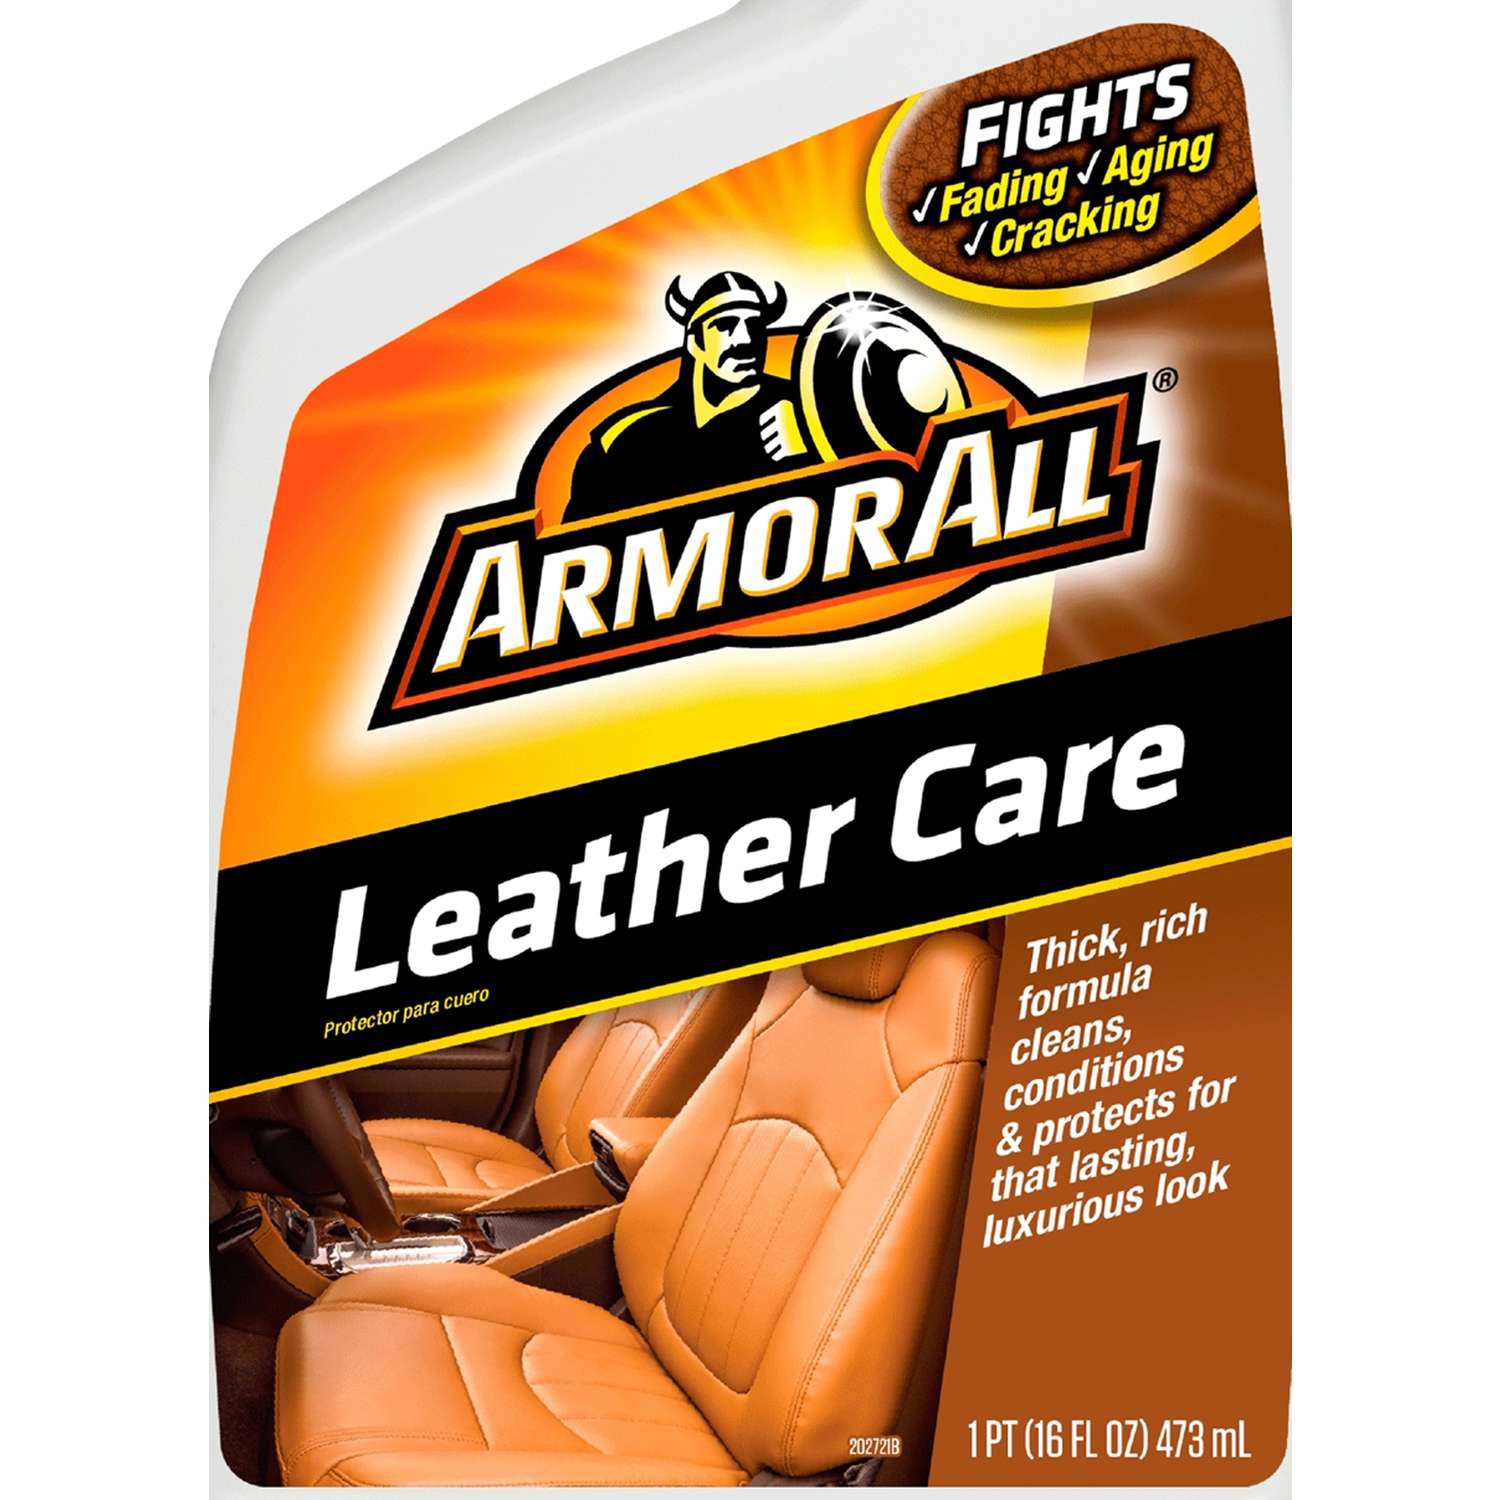 Armor All 16 fl. oz. Leather Care